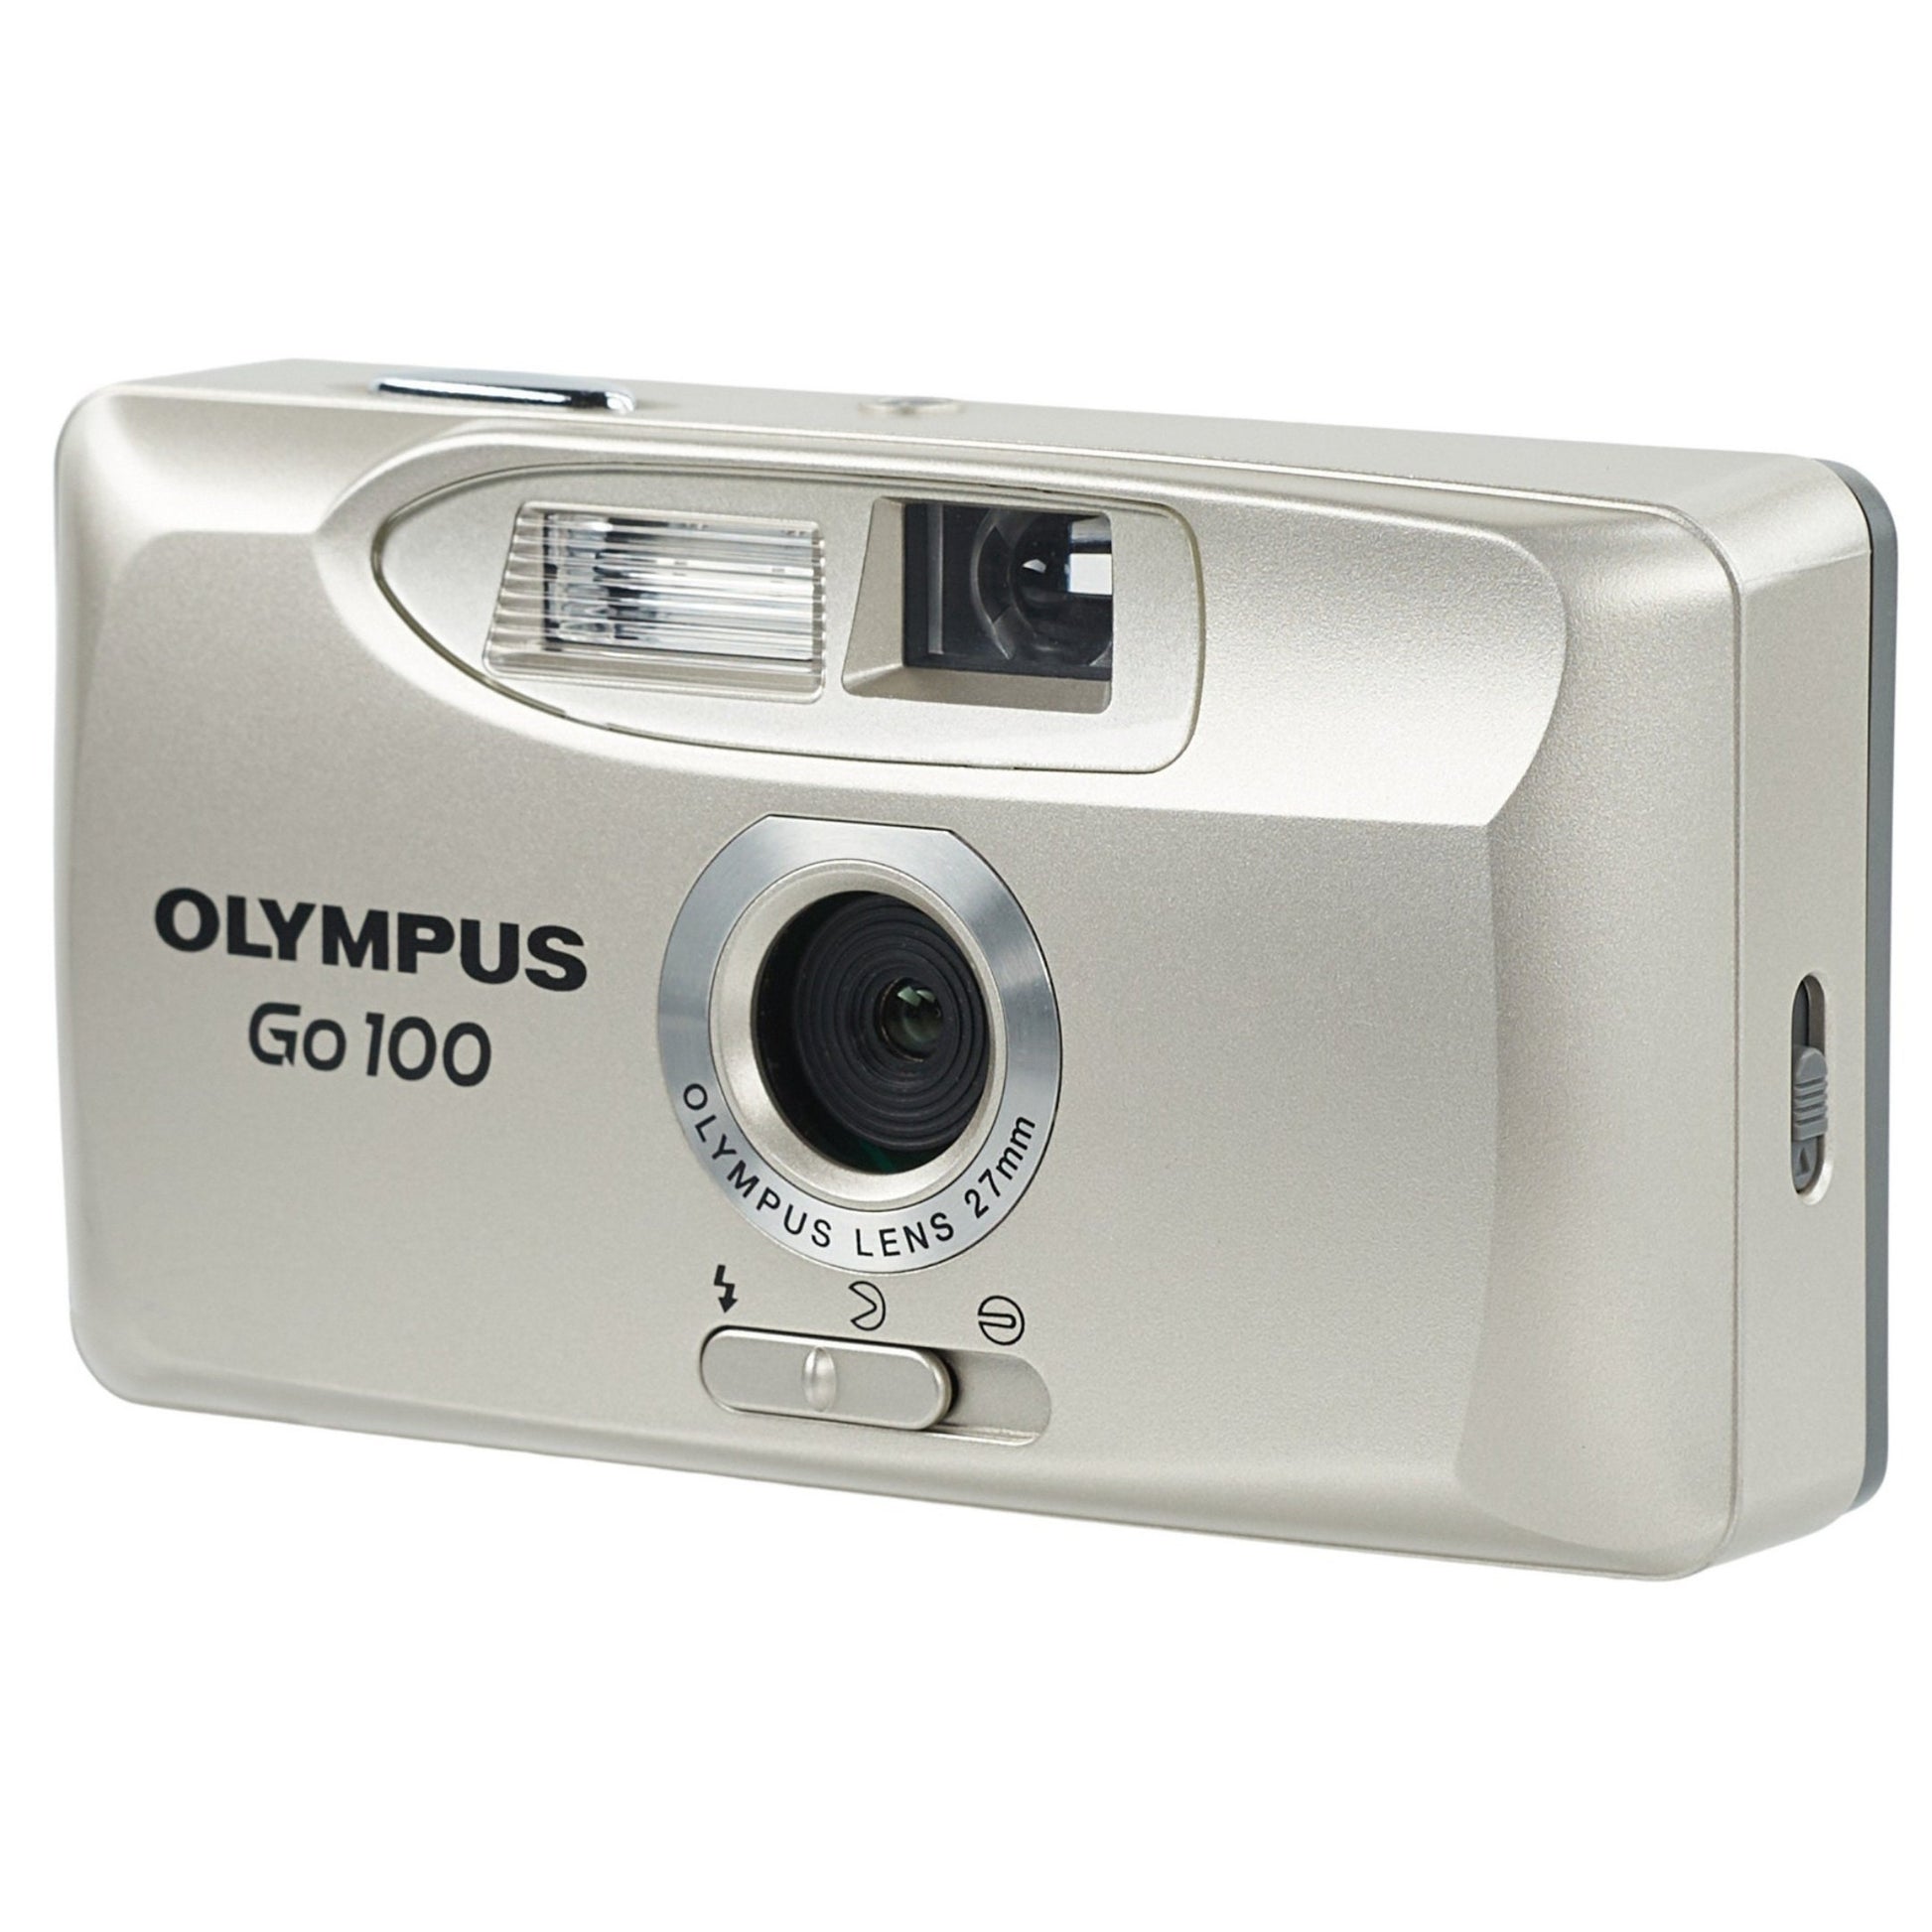 NEW!! Olympus Go 100 Vintage Camera, Point and Shot Camera, Working Film Camera - Vintage Polaroid Instant Cameras